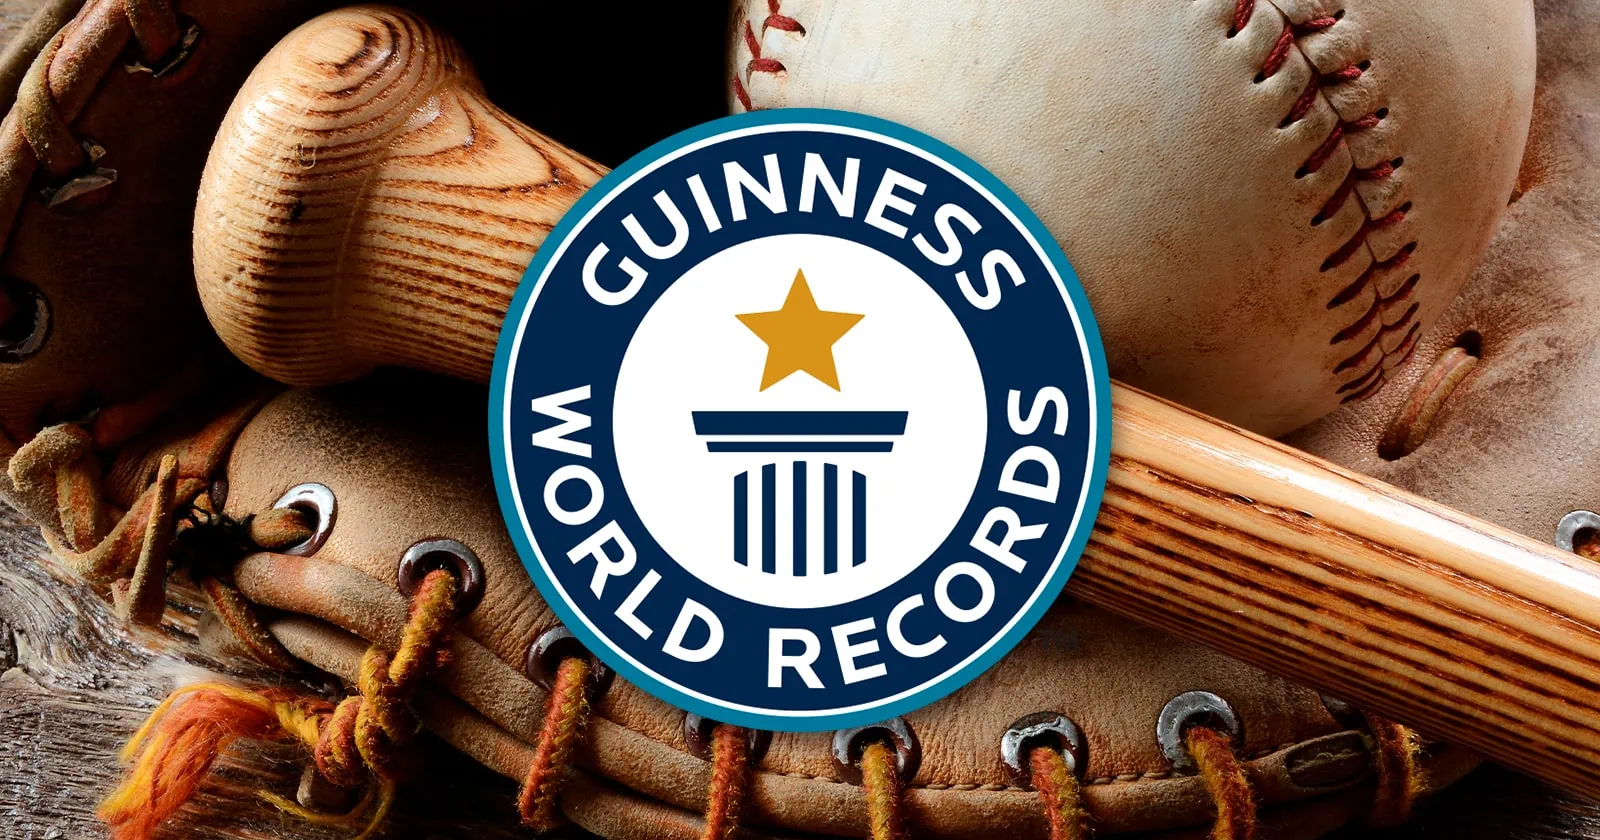 Pitcher Cubano Obtiene Certificado de Récord Guinness